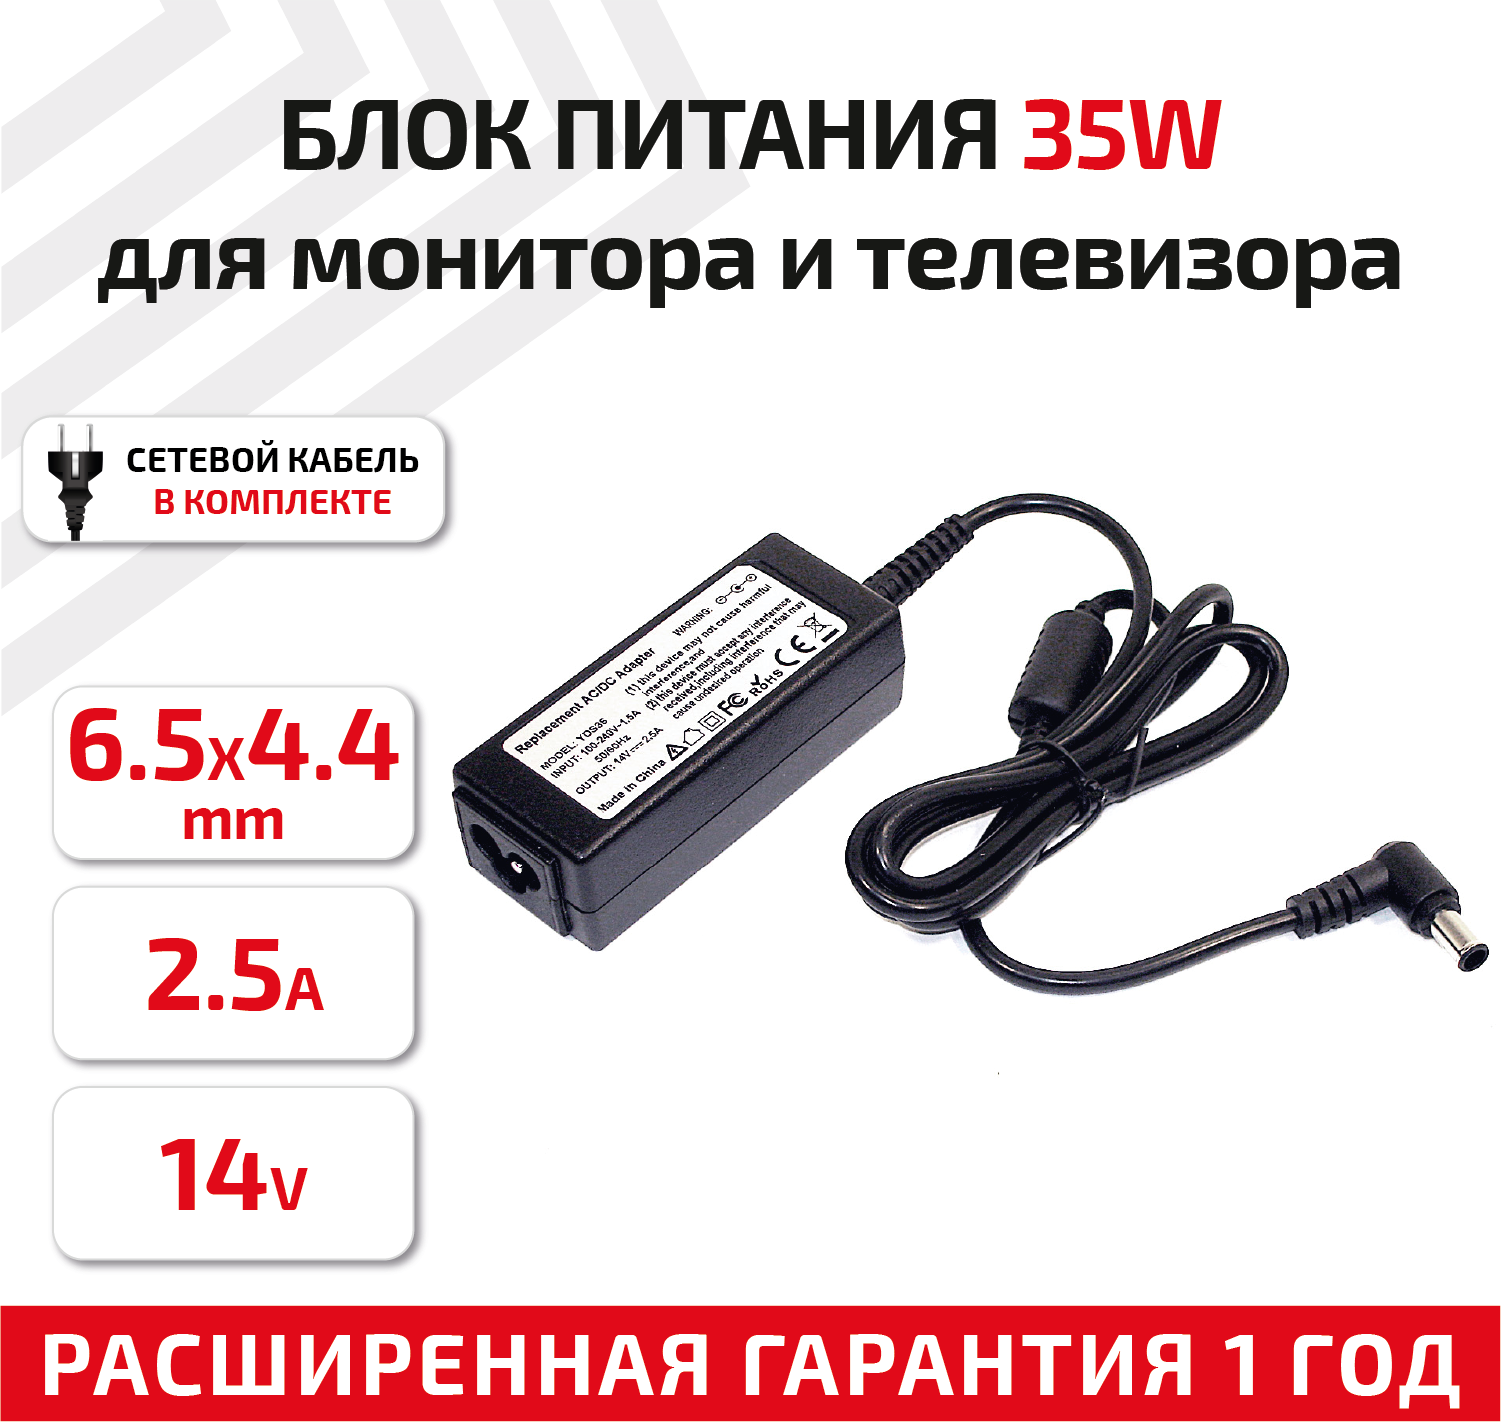 Зарядное устройство (блок питания/зарядка) для монитора и телевизора LCD 14В, 2.5А, 35Вт, 6.5x4.4мм